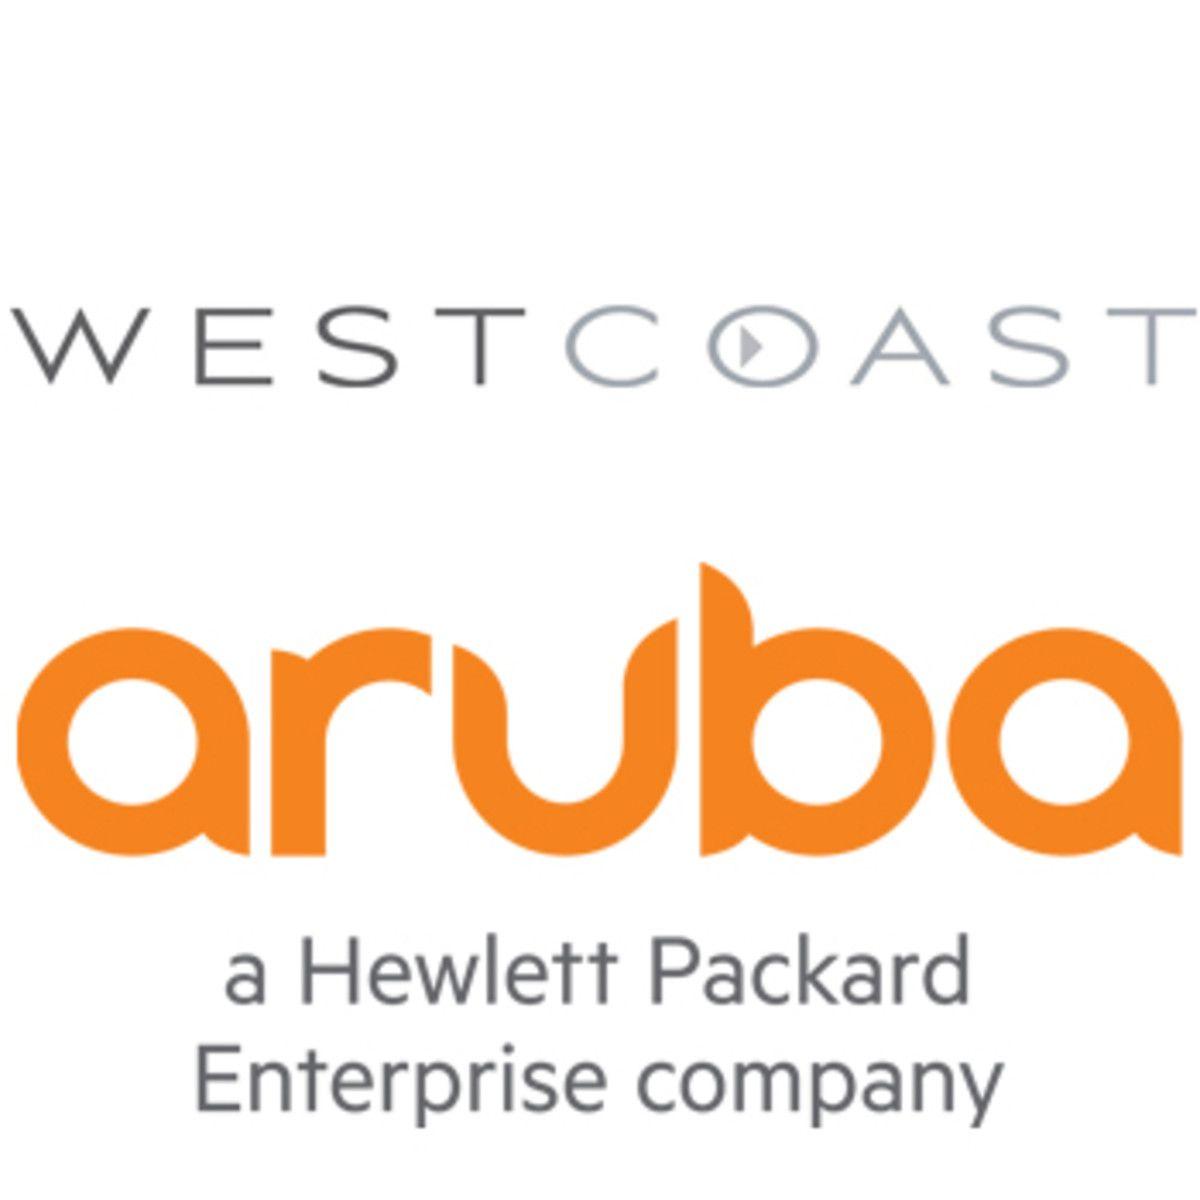 HPE Aruba Logo - Westcoast to distribute HPE's Aruba networking solutions - PC Retail